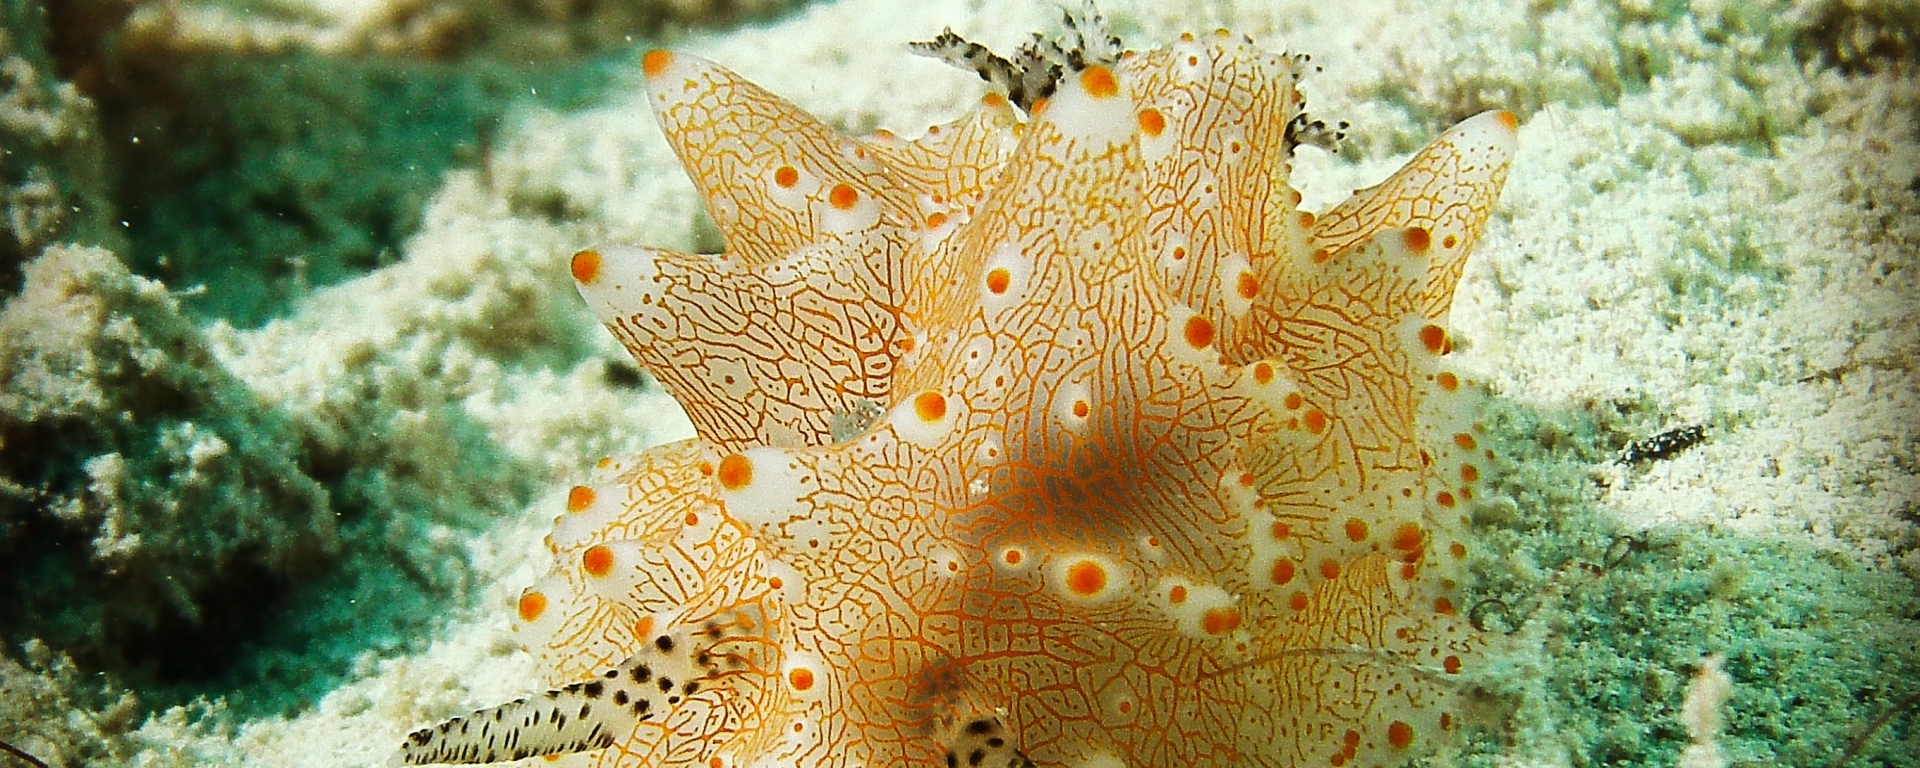 Halgerda batangas, Nudibranch on sea floor